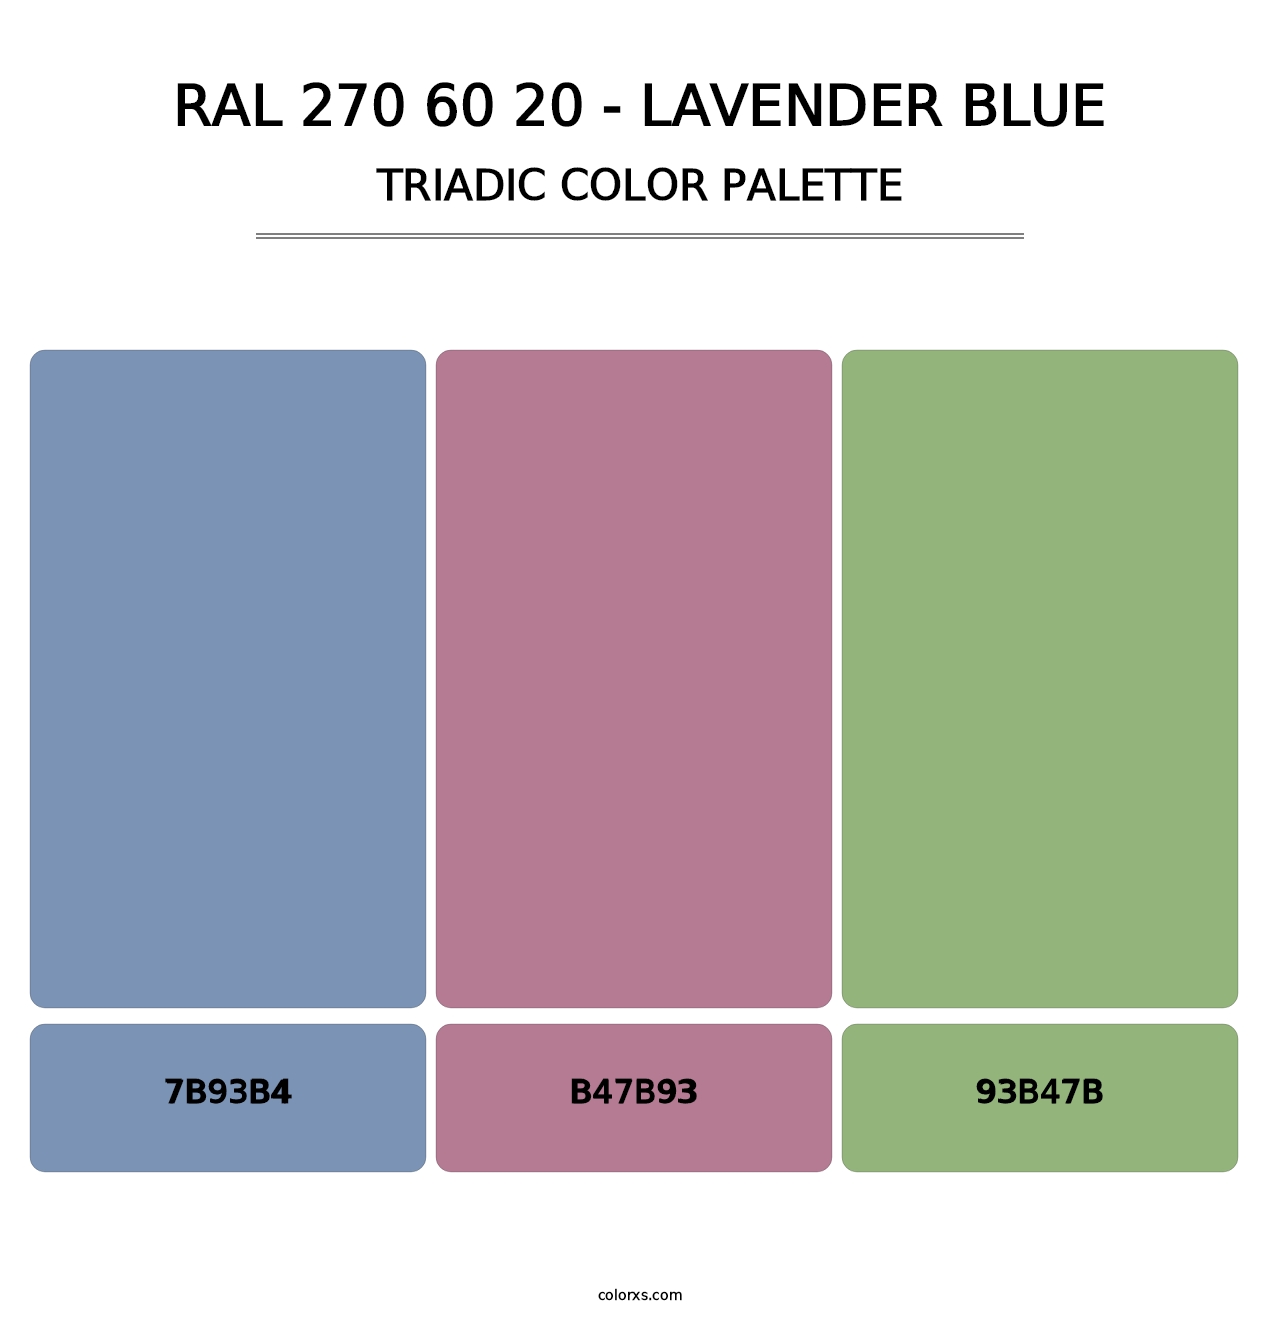 RAL 270 60 20 - Lavender Blue - Triadic Color Palette